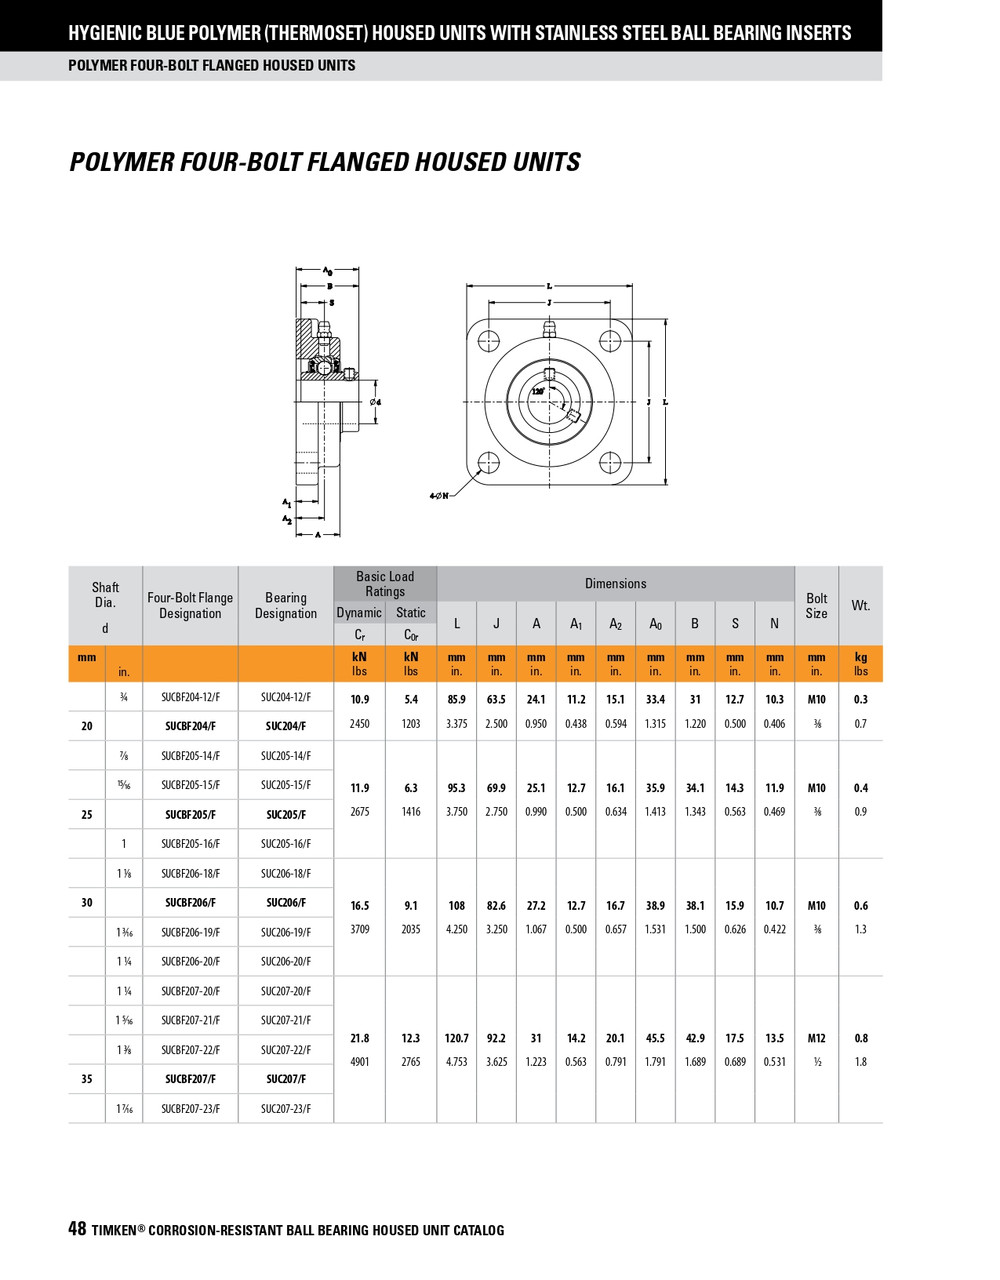 1" Hygienic Polymer Set Screw Flange Block Assembly   SUCBF205-16/F